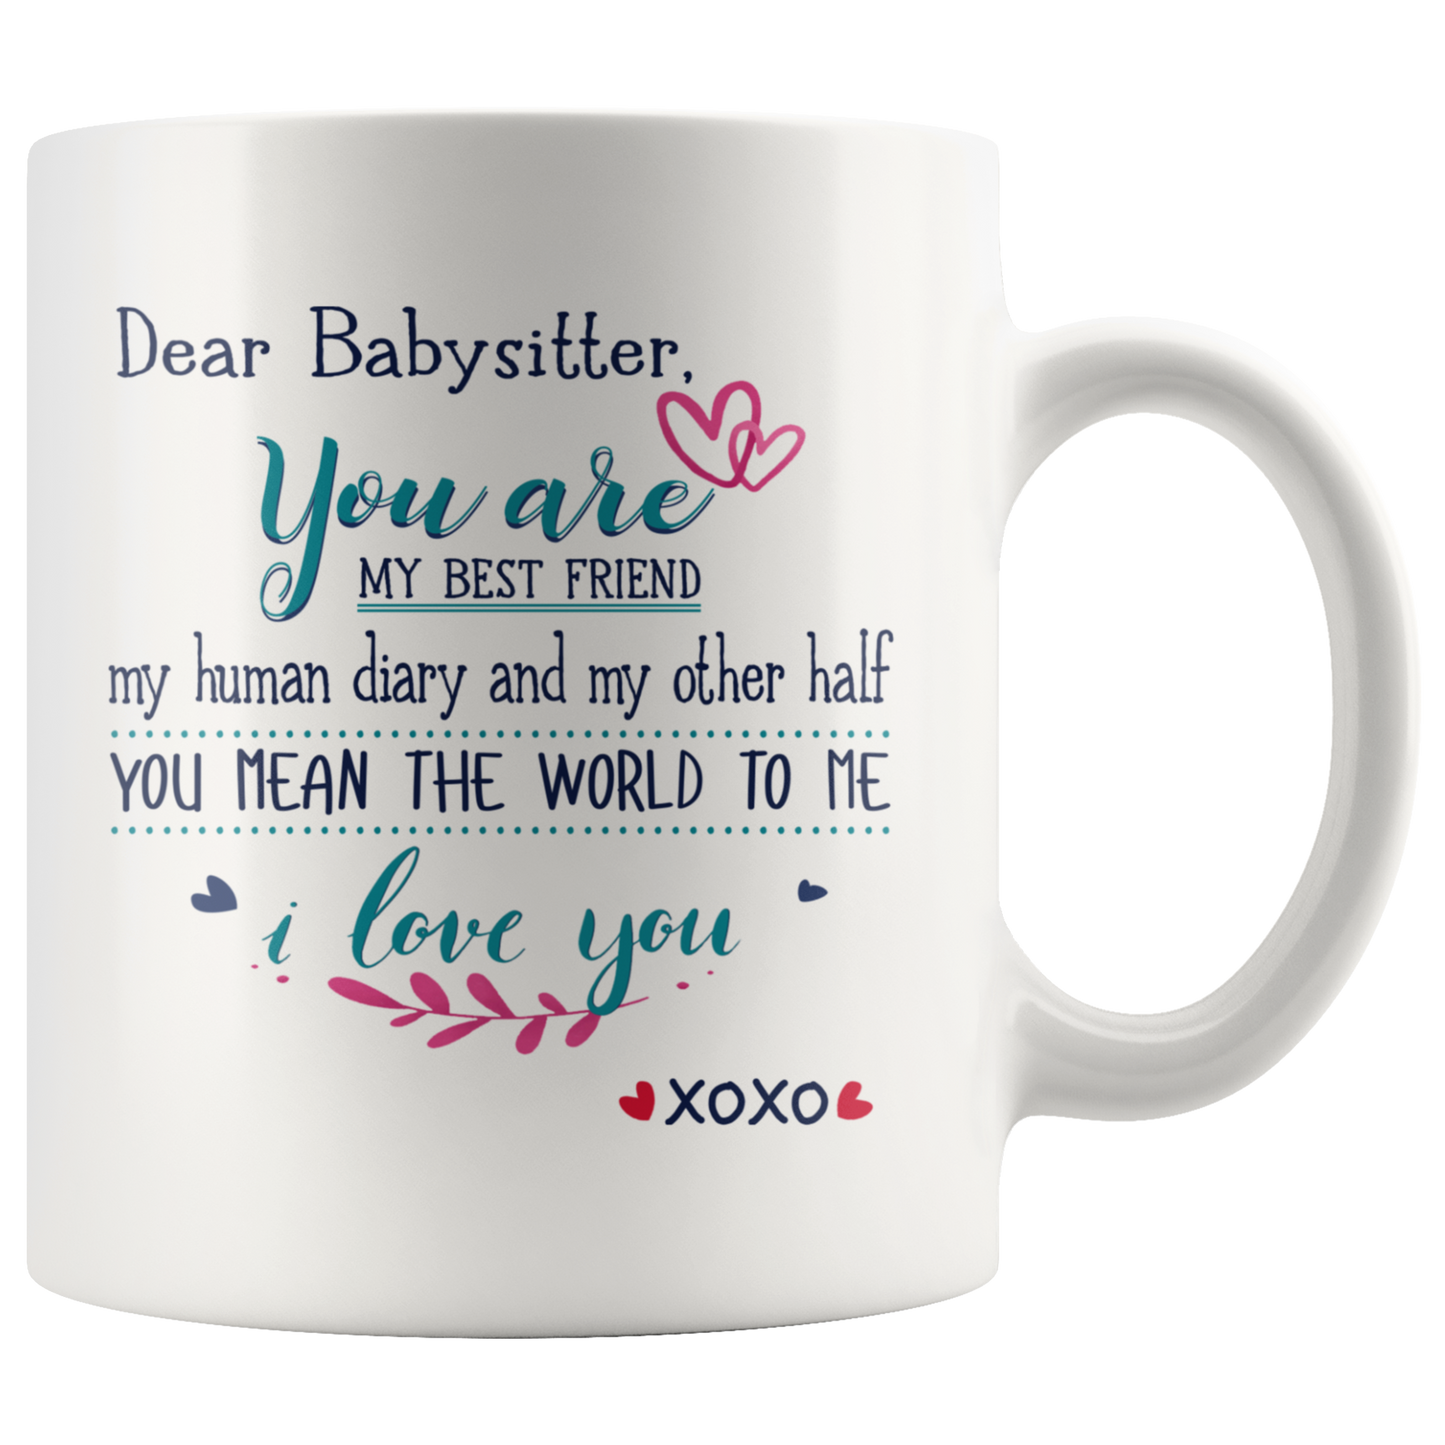 ND20456359-sp-24317 - [ Babysitter | 1 ]Coffee Mug Anniversary - Dear Babysitter You Are My Best Fri